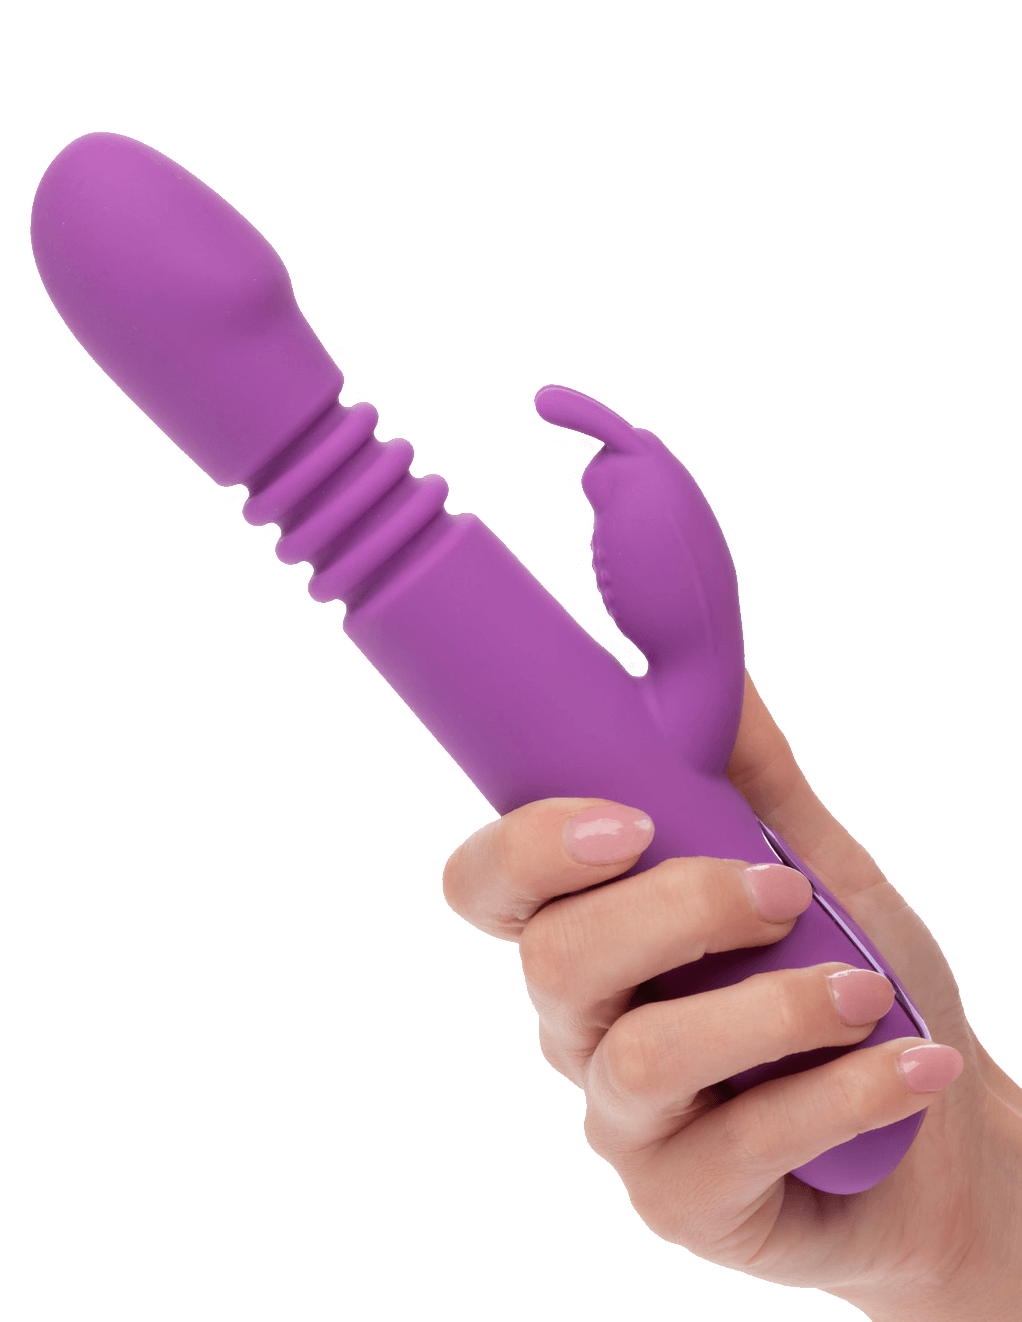 Jack Rabbit Elite Thrusting Rabbit Vibrator - Purple - In Hand